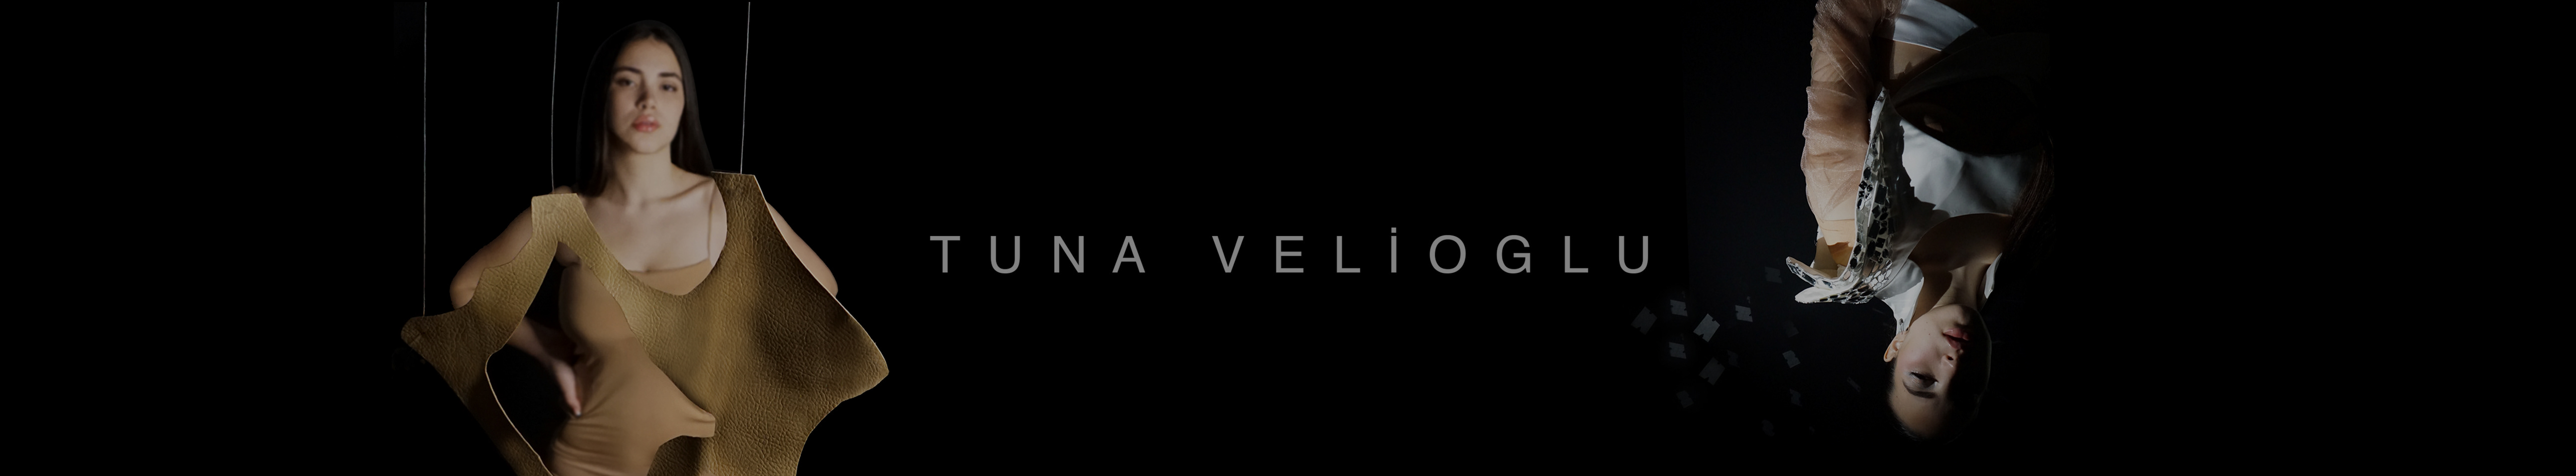 Tuna Velioglu's profile banner